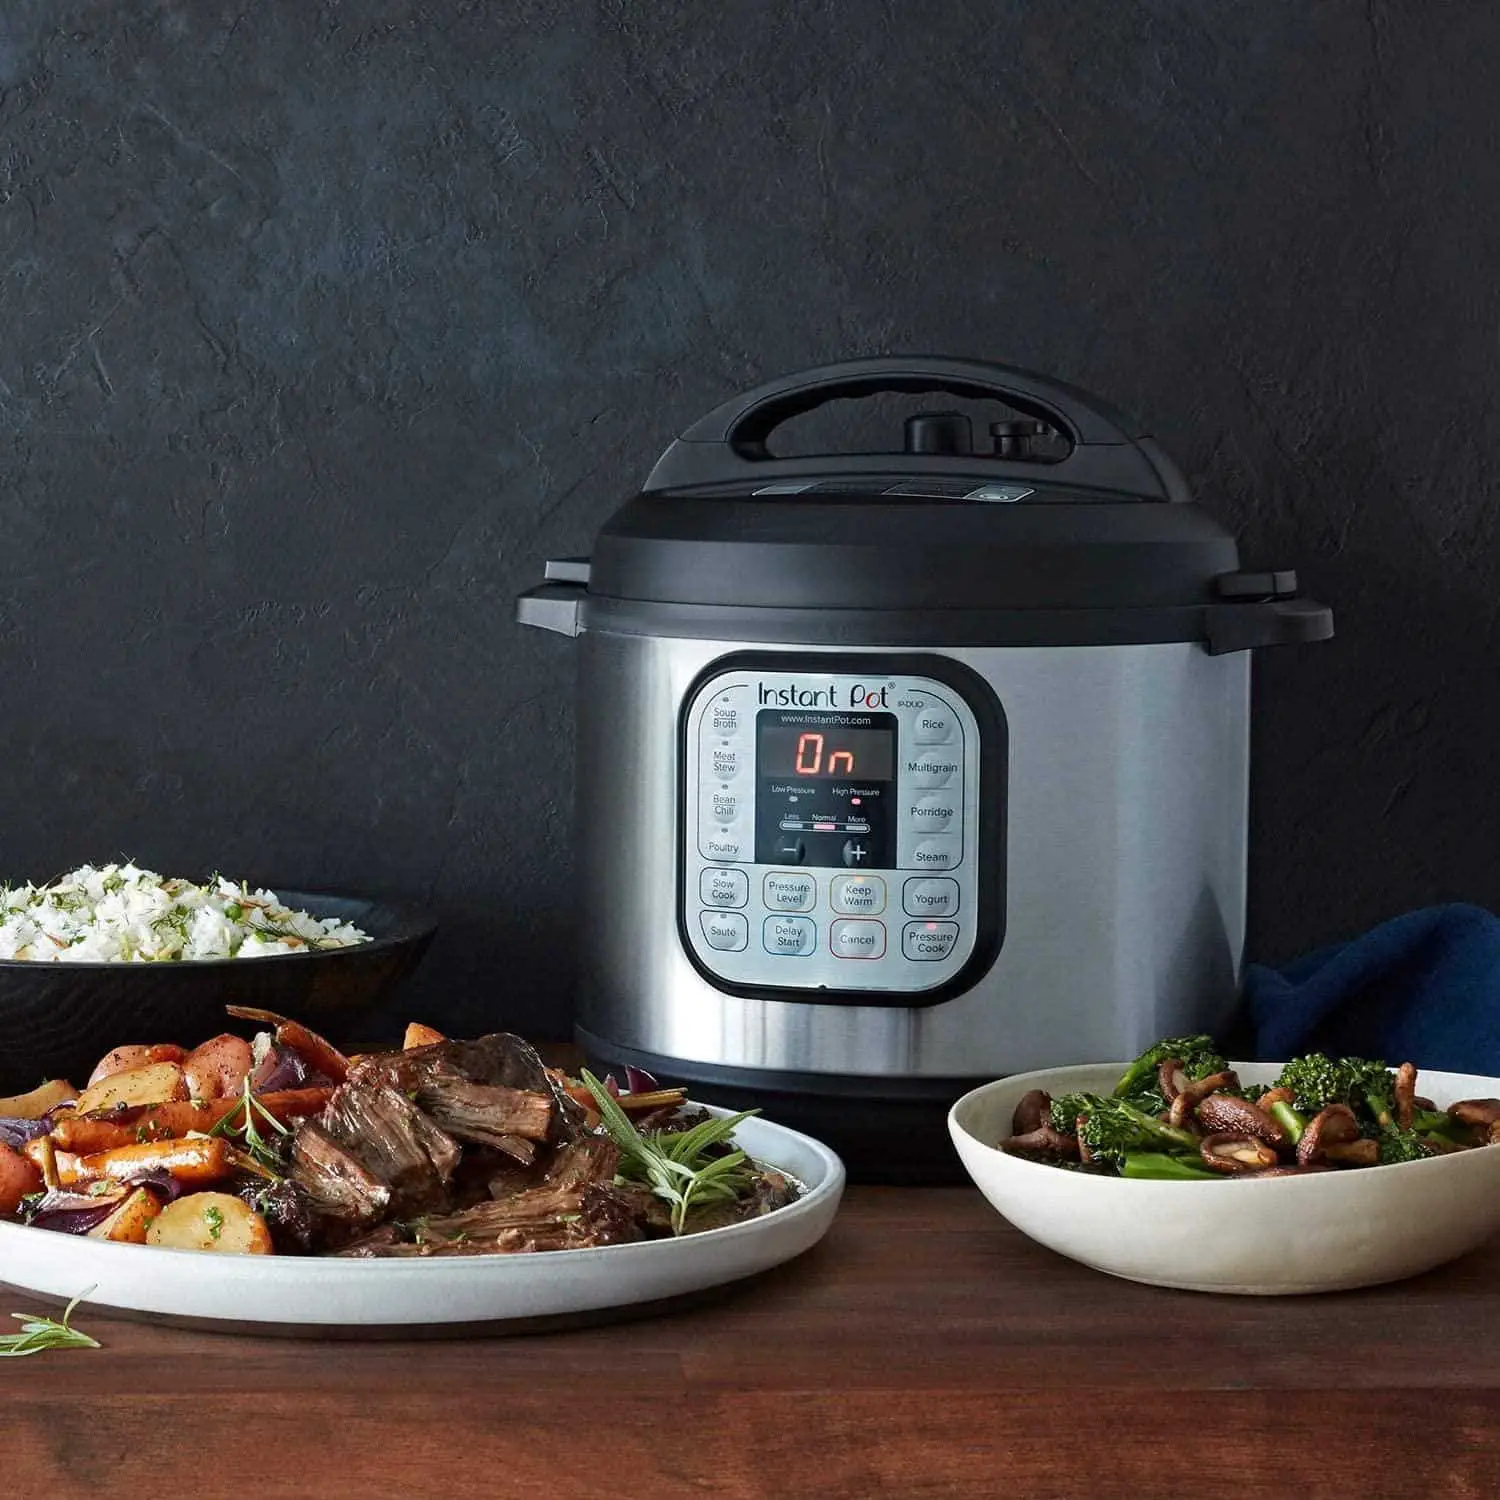 Instant Pot vs Pressure Cooker: What